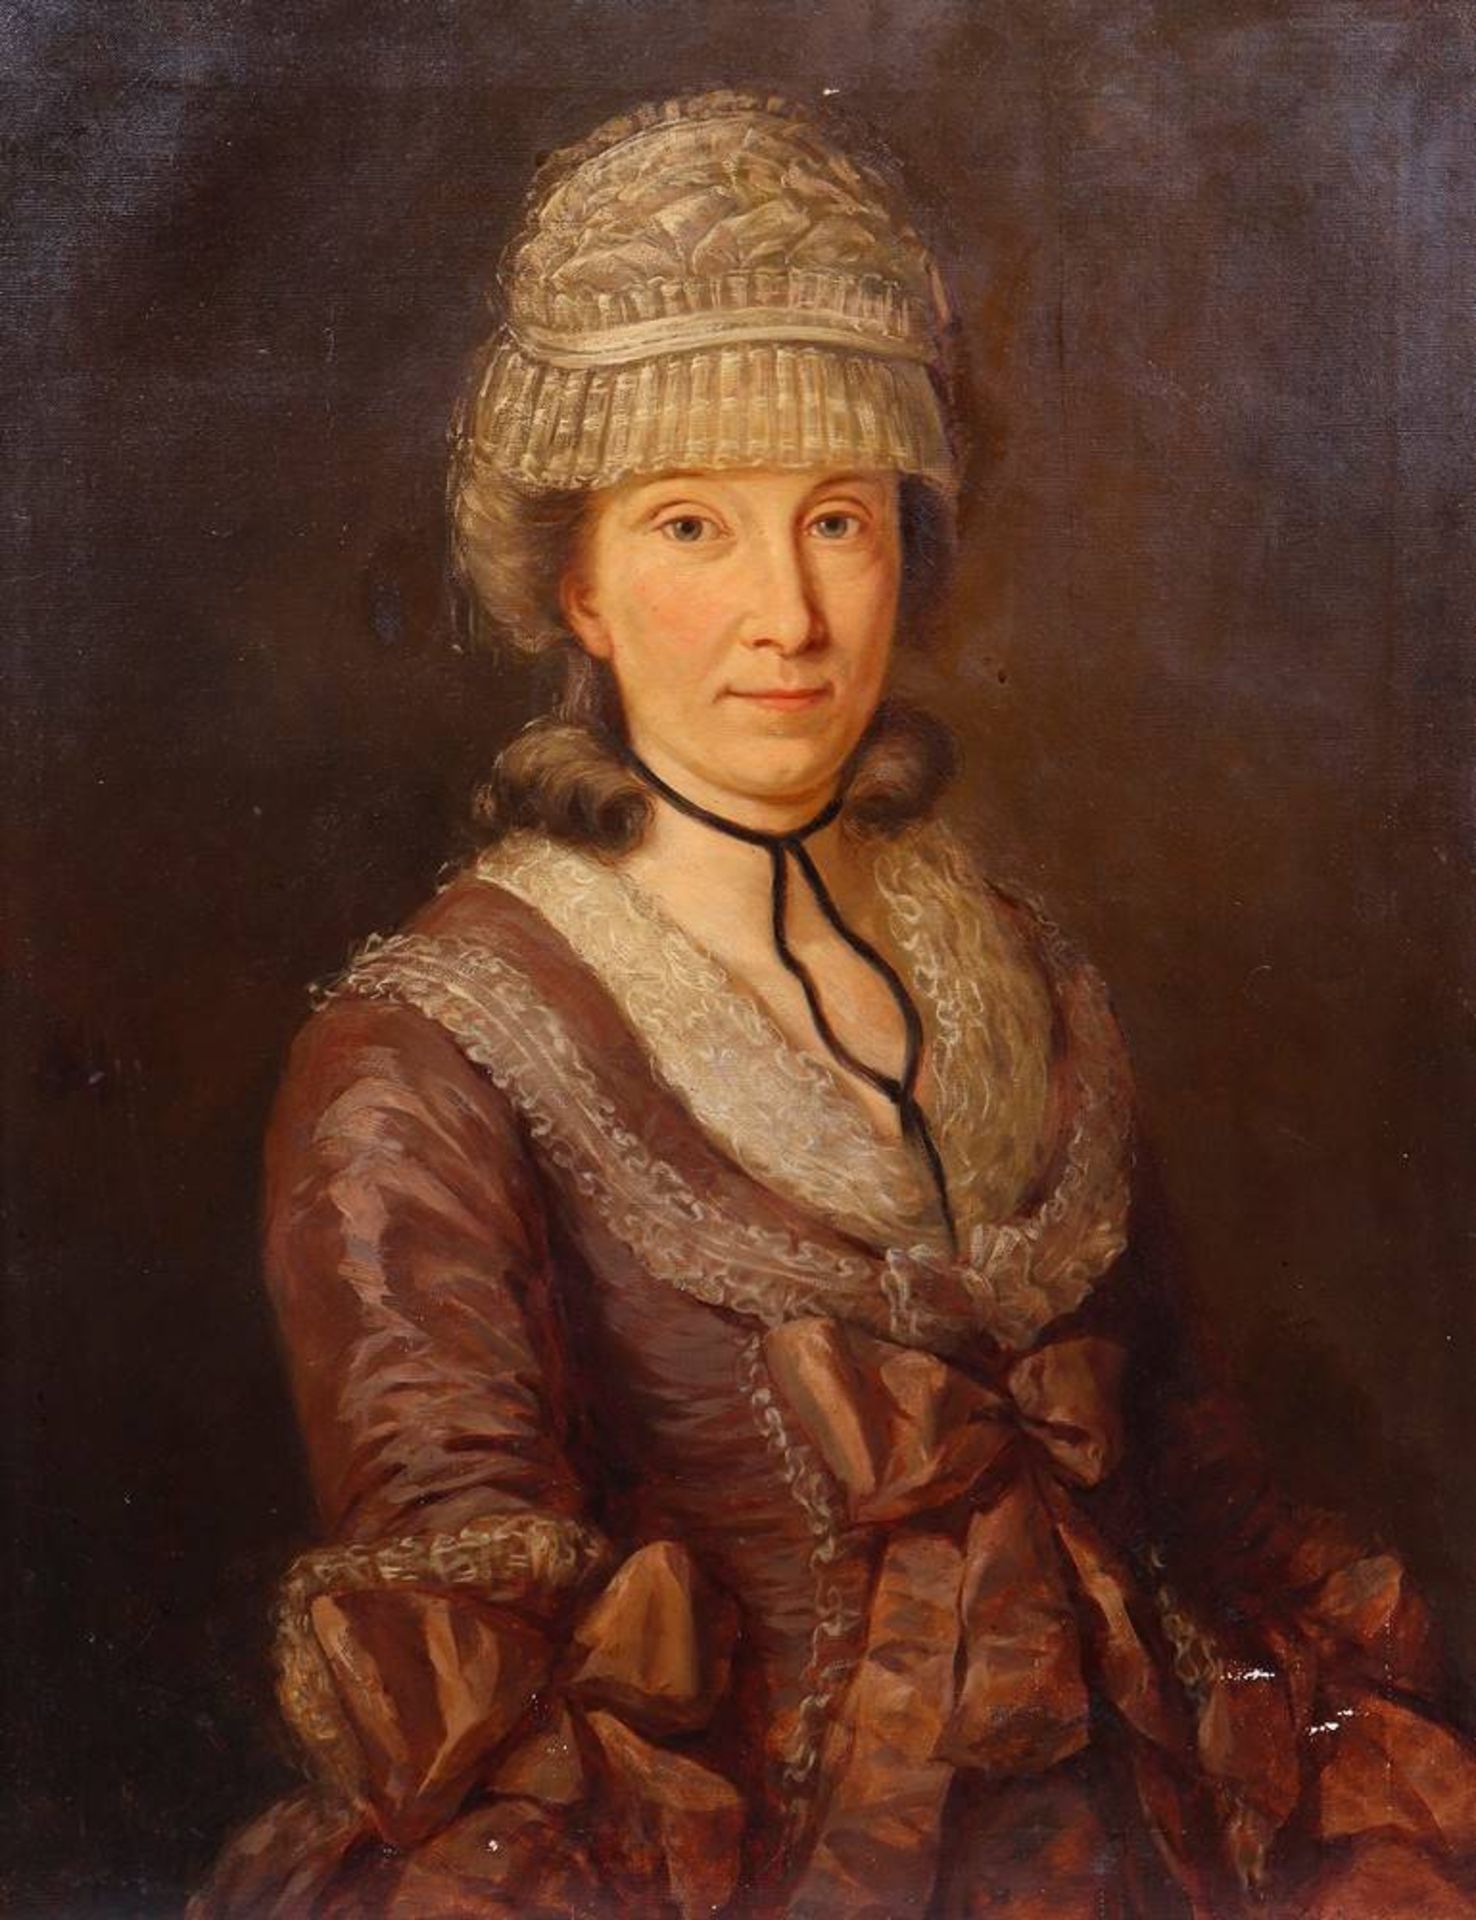 Portrait of a Lady with a Lace Bonnet, 18th/19th C. - Image 2 of 6